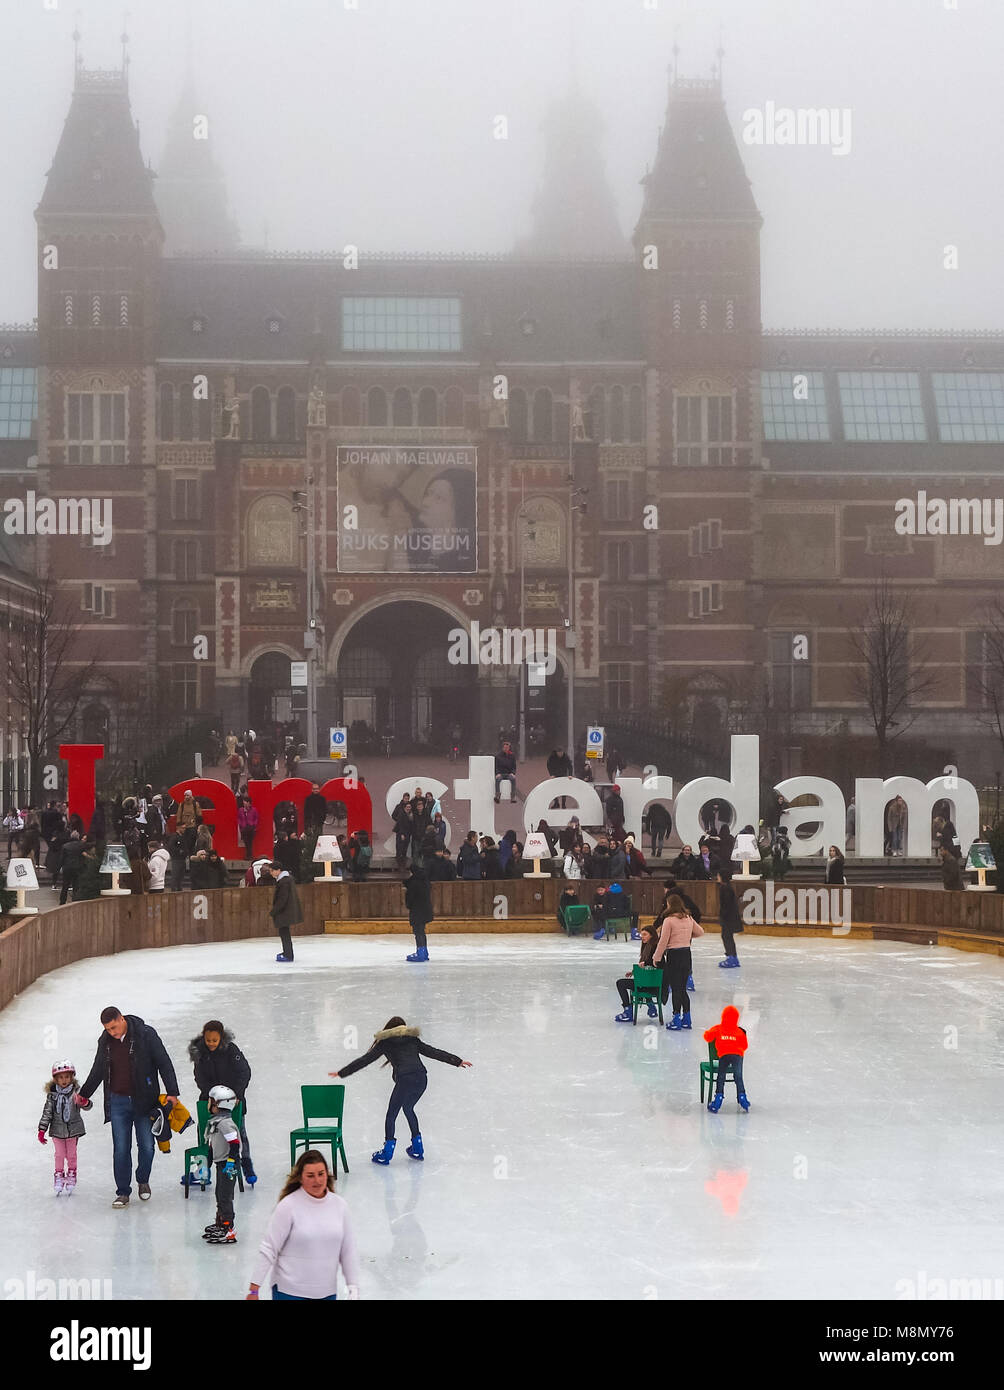 Dec 20, 2017 - People enjoying Ice skating in the gardens of the Rijksmuseum, Amsterdam, Netherlands Stock Photo